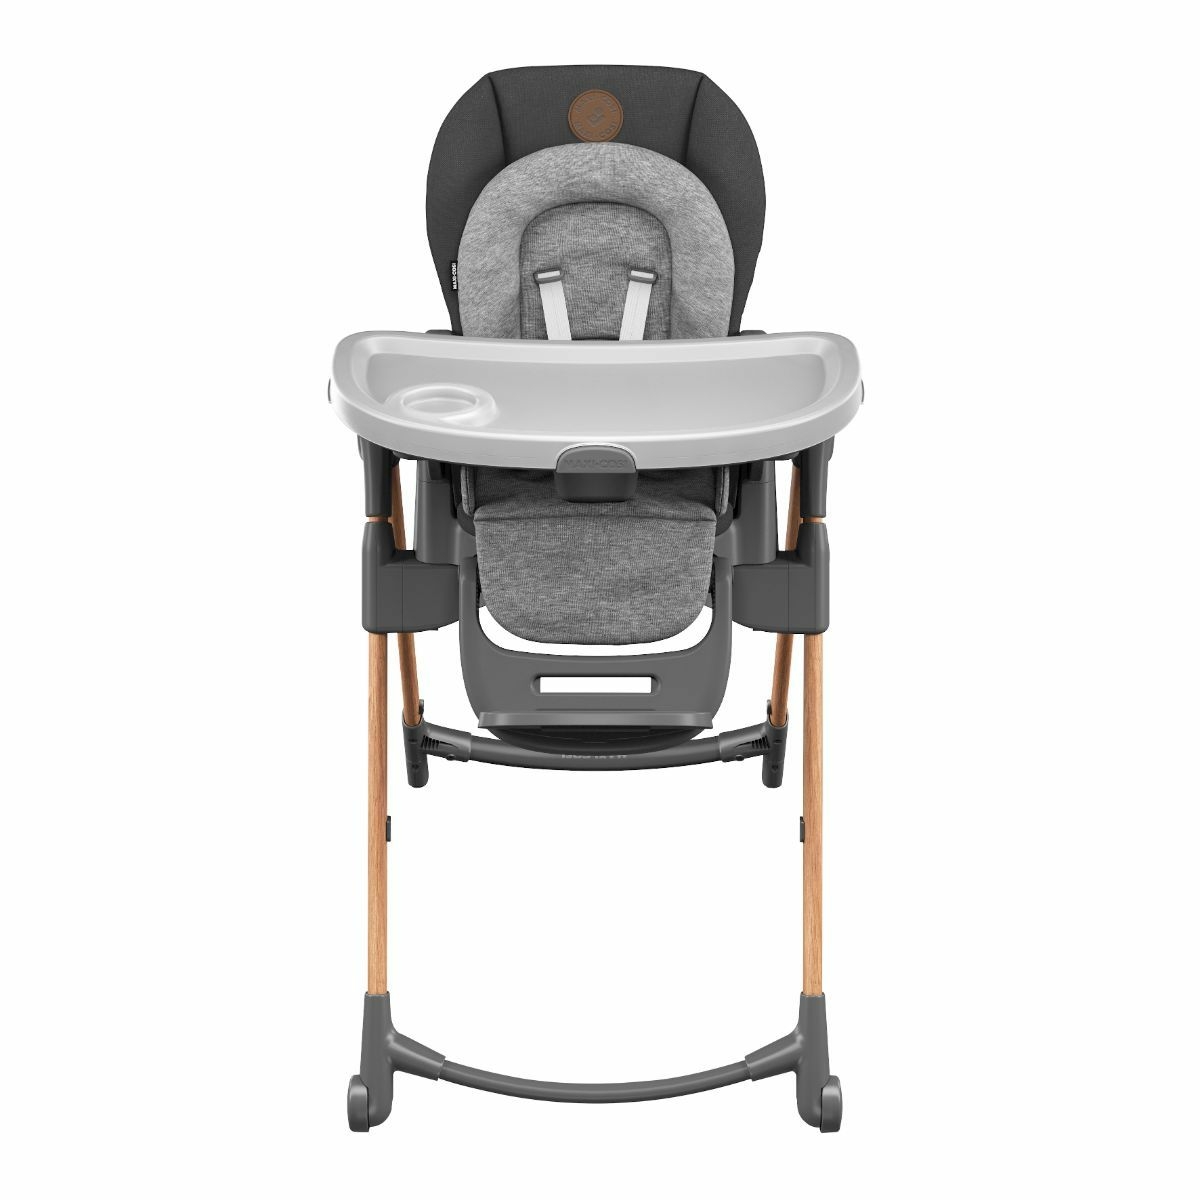 Maxi Cosi Minla High Chair Birth to approx 6 years maximum 30kg - 310060